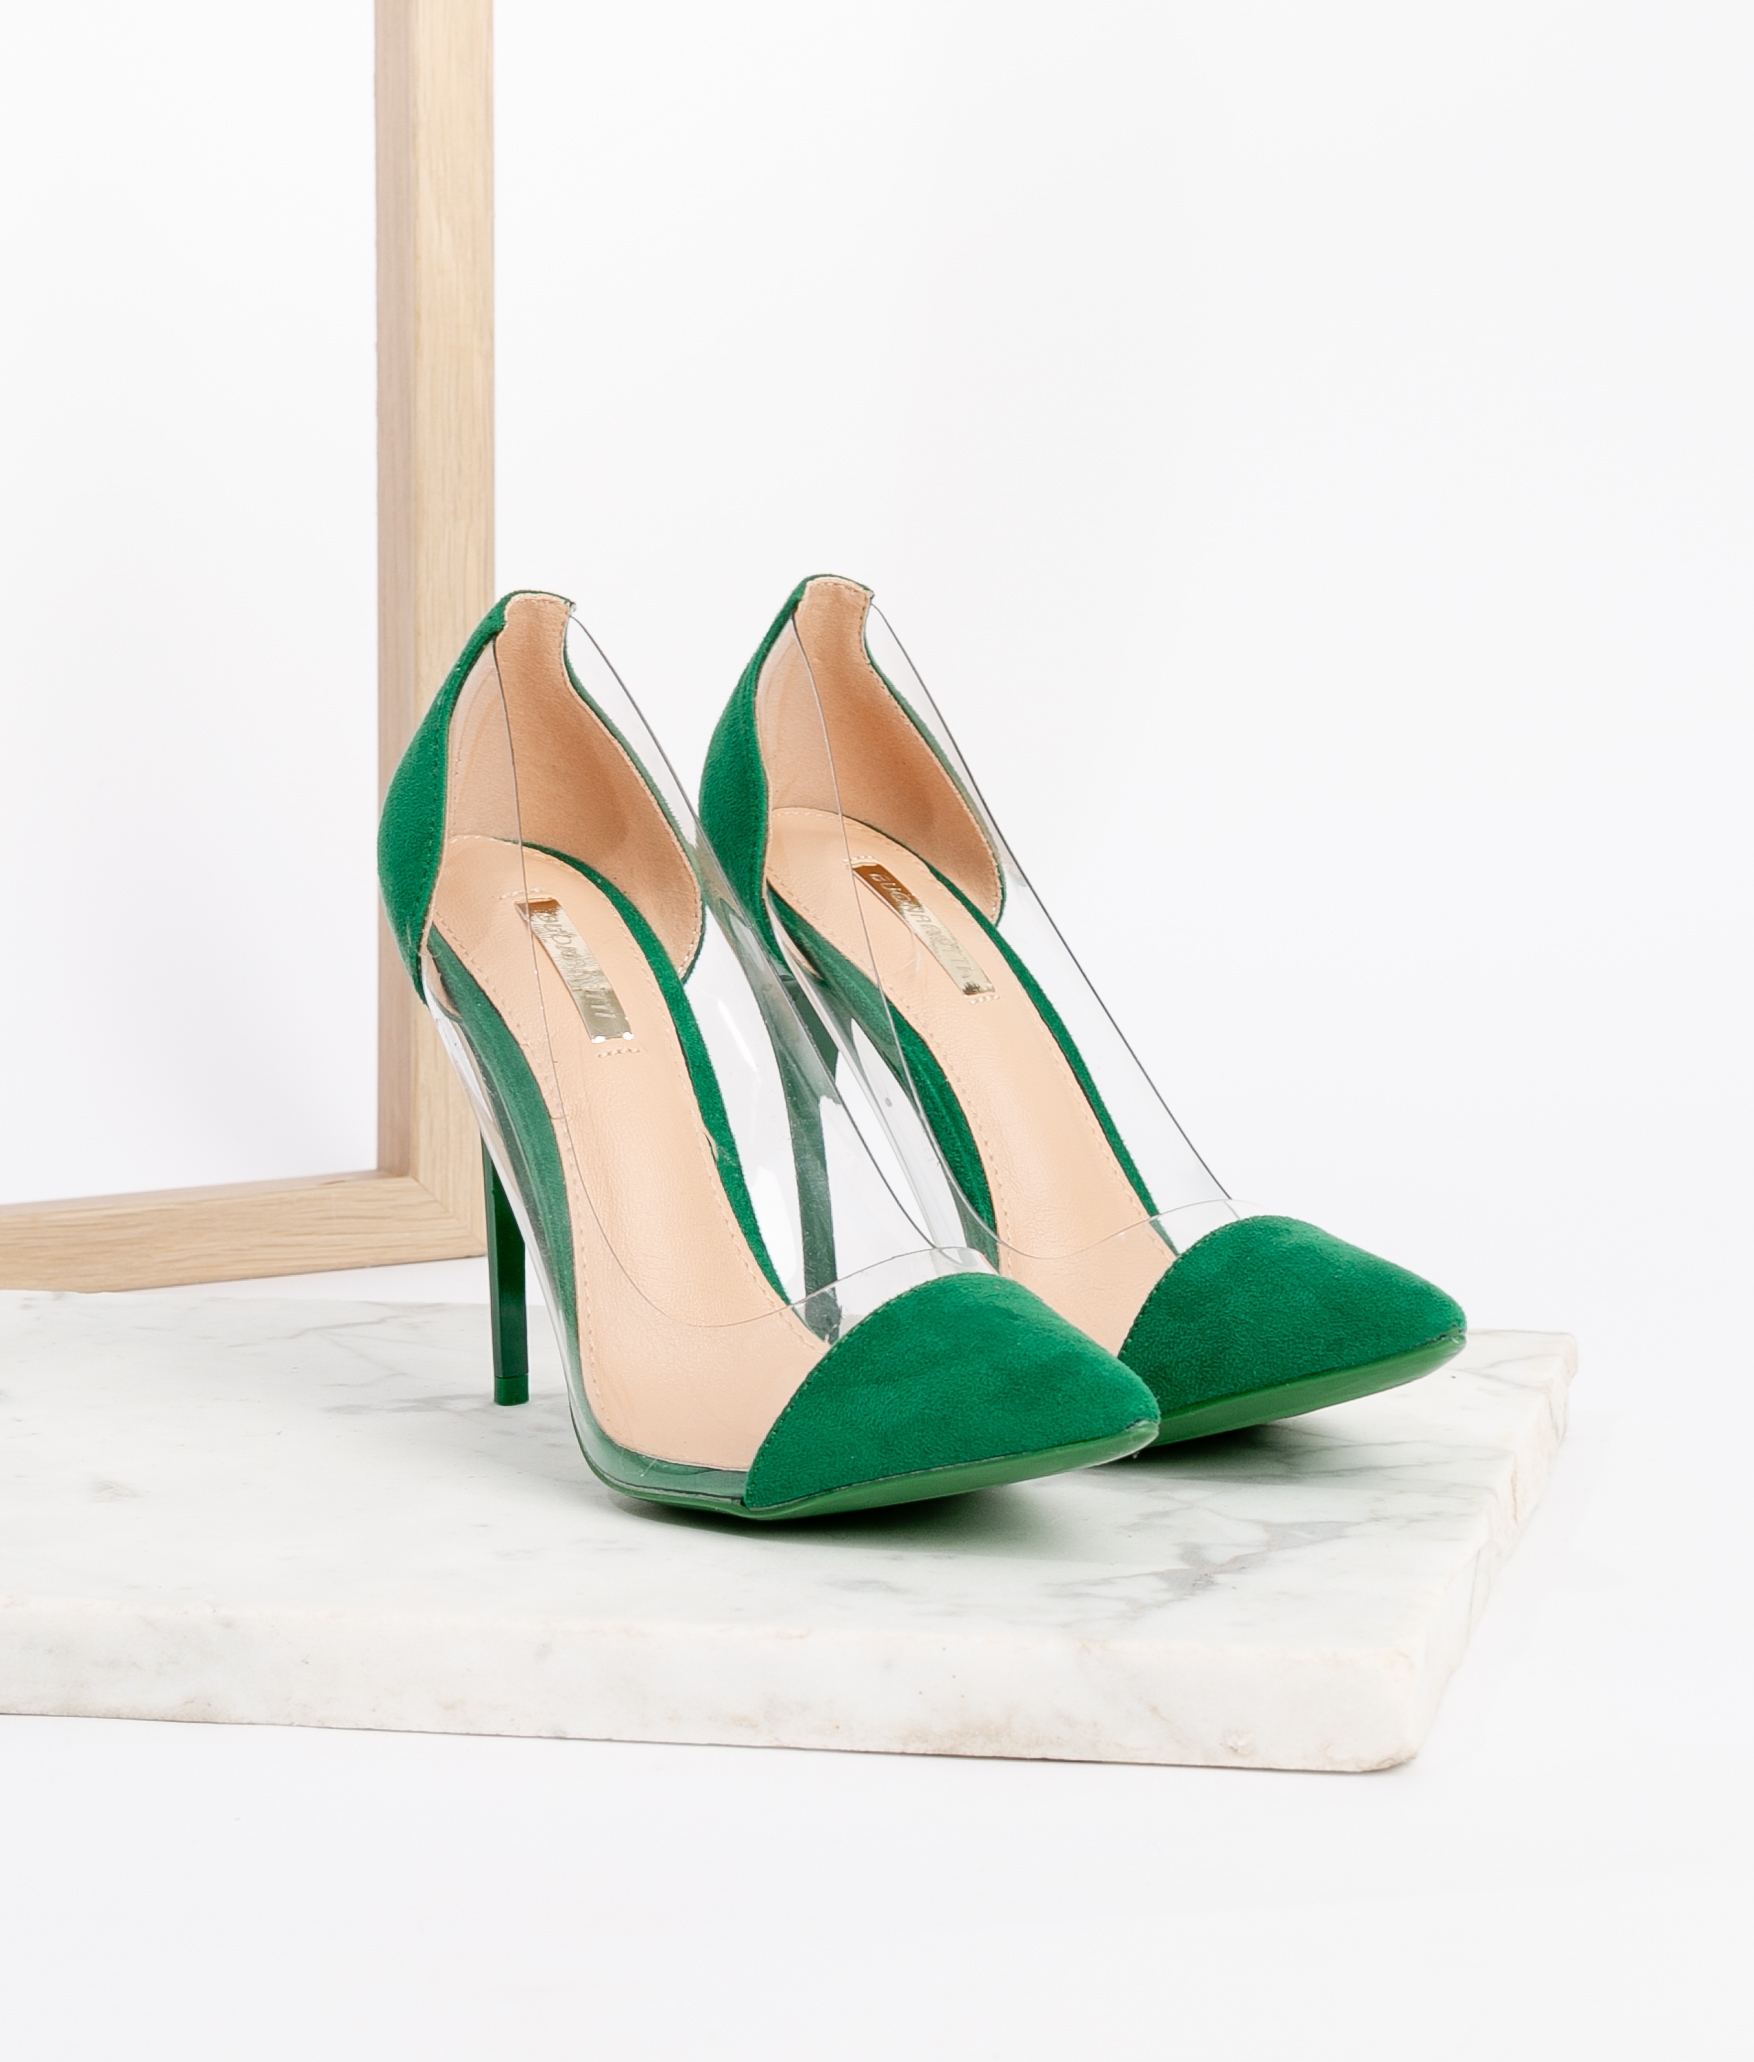 Zapatos Verde Esmeralda Clearance - deportesinc.com 1688467466